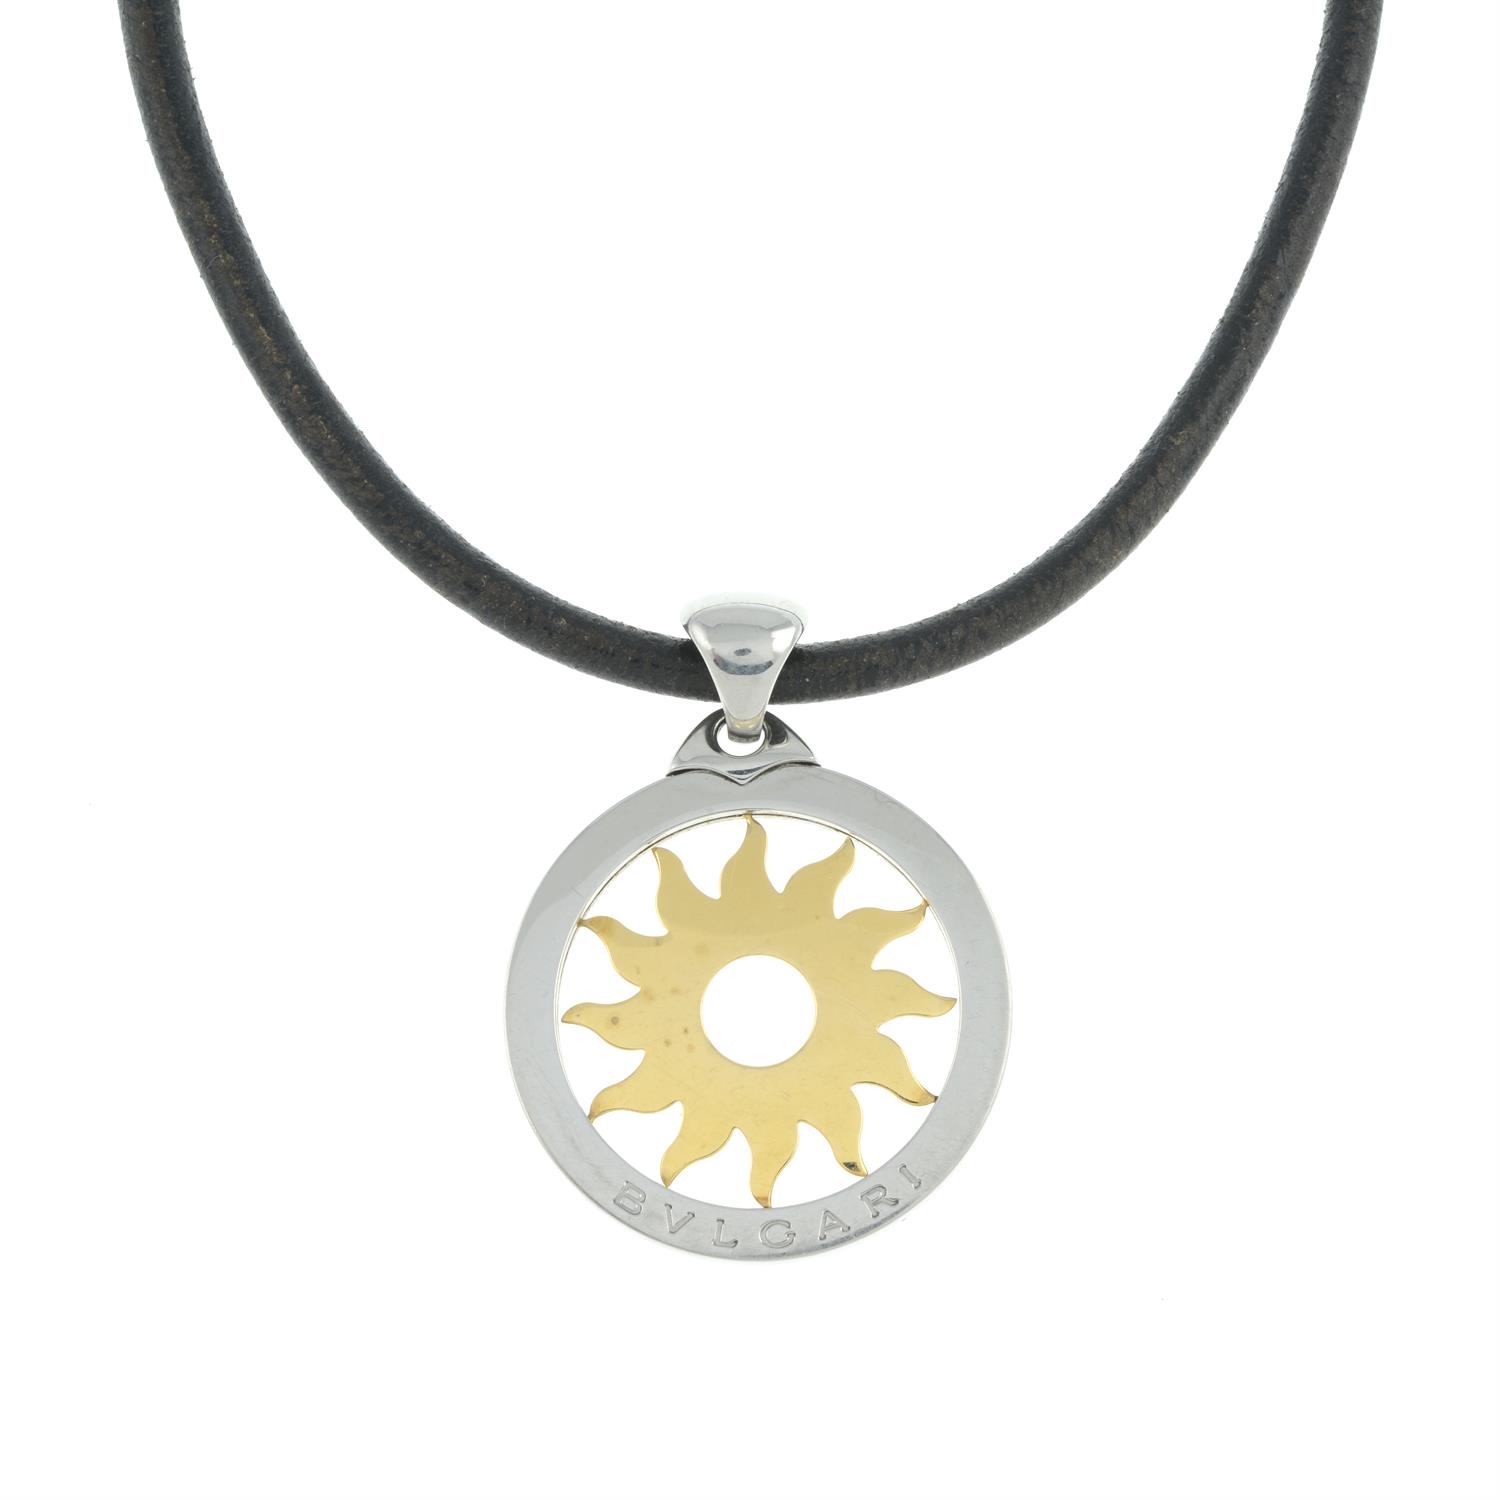 'Tondo' pendant, with collar, by Bulgari - Image 3 of 5